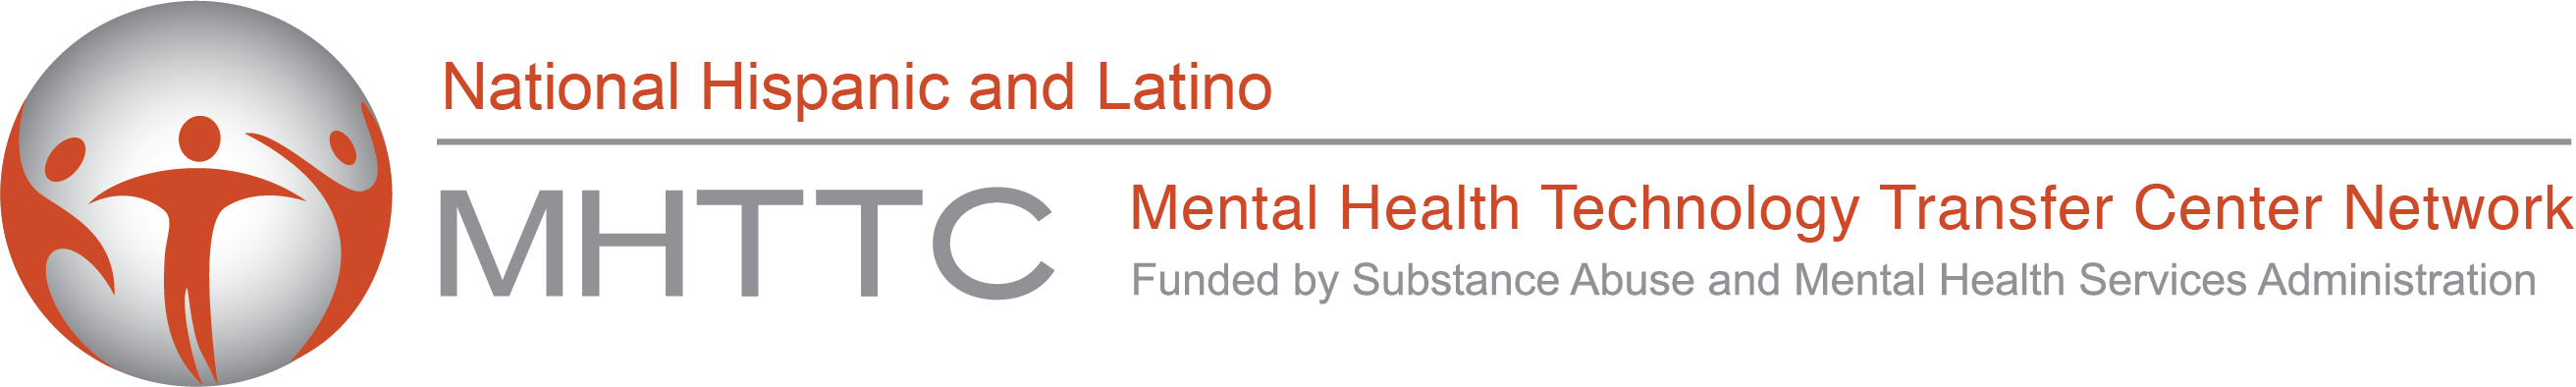 National Hispanic & Latino MHTTC logo